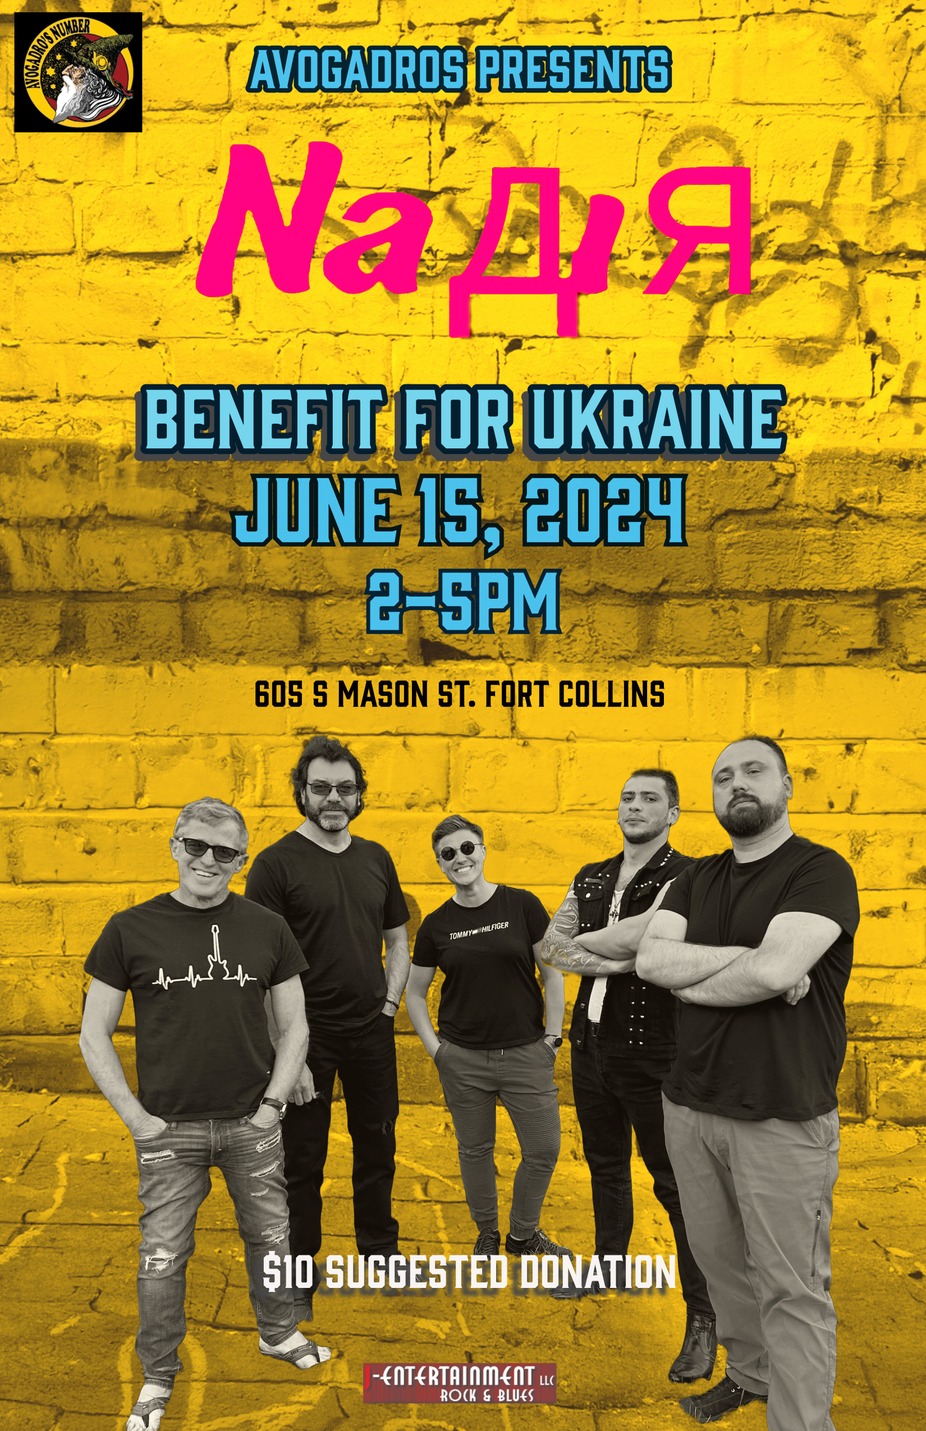 Ukrainian Fundraiser event photo